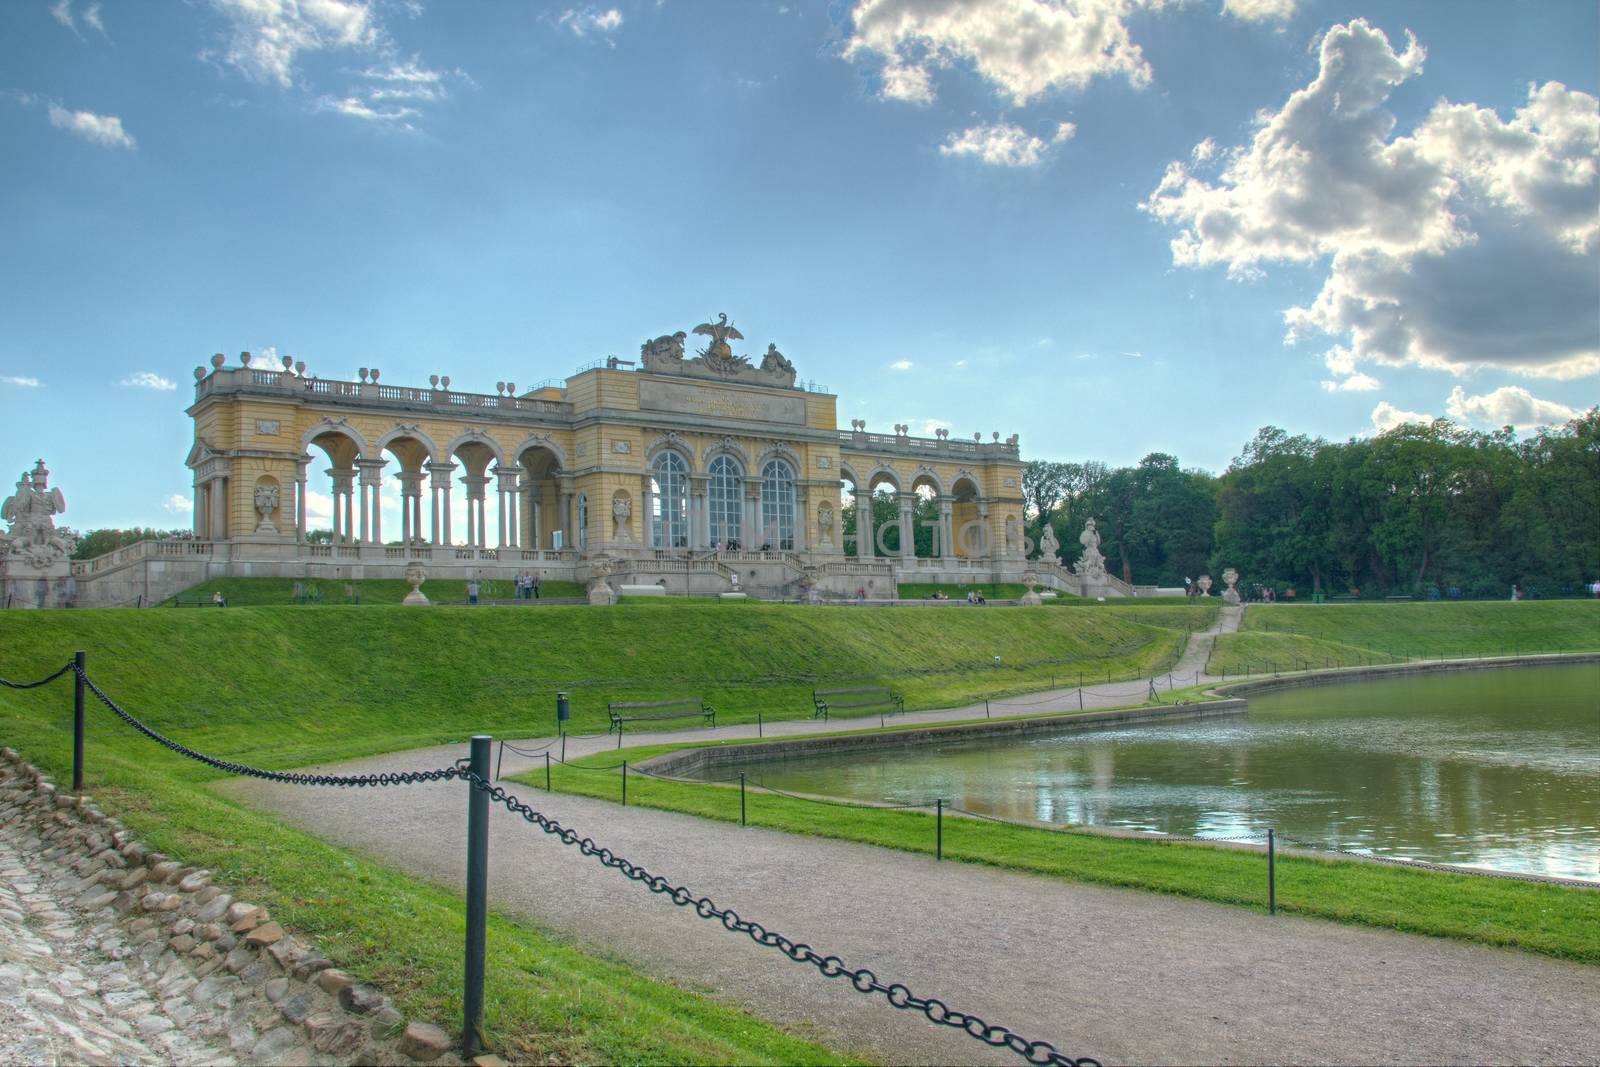 Garden of Schonbrunn Palace in Wien, Austria by Dermot68